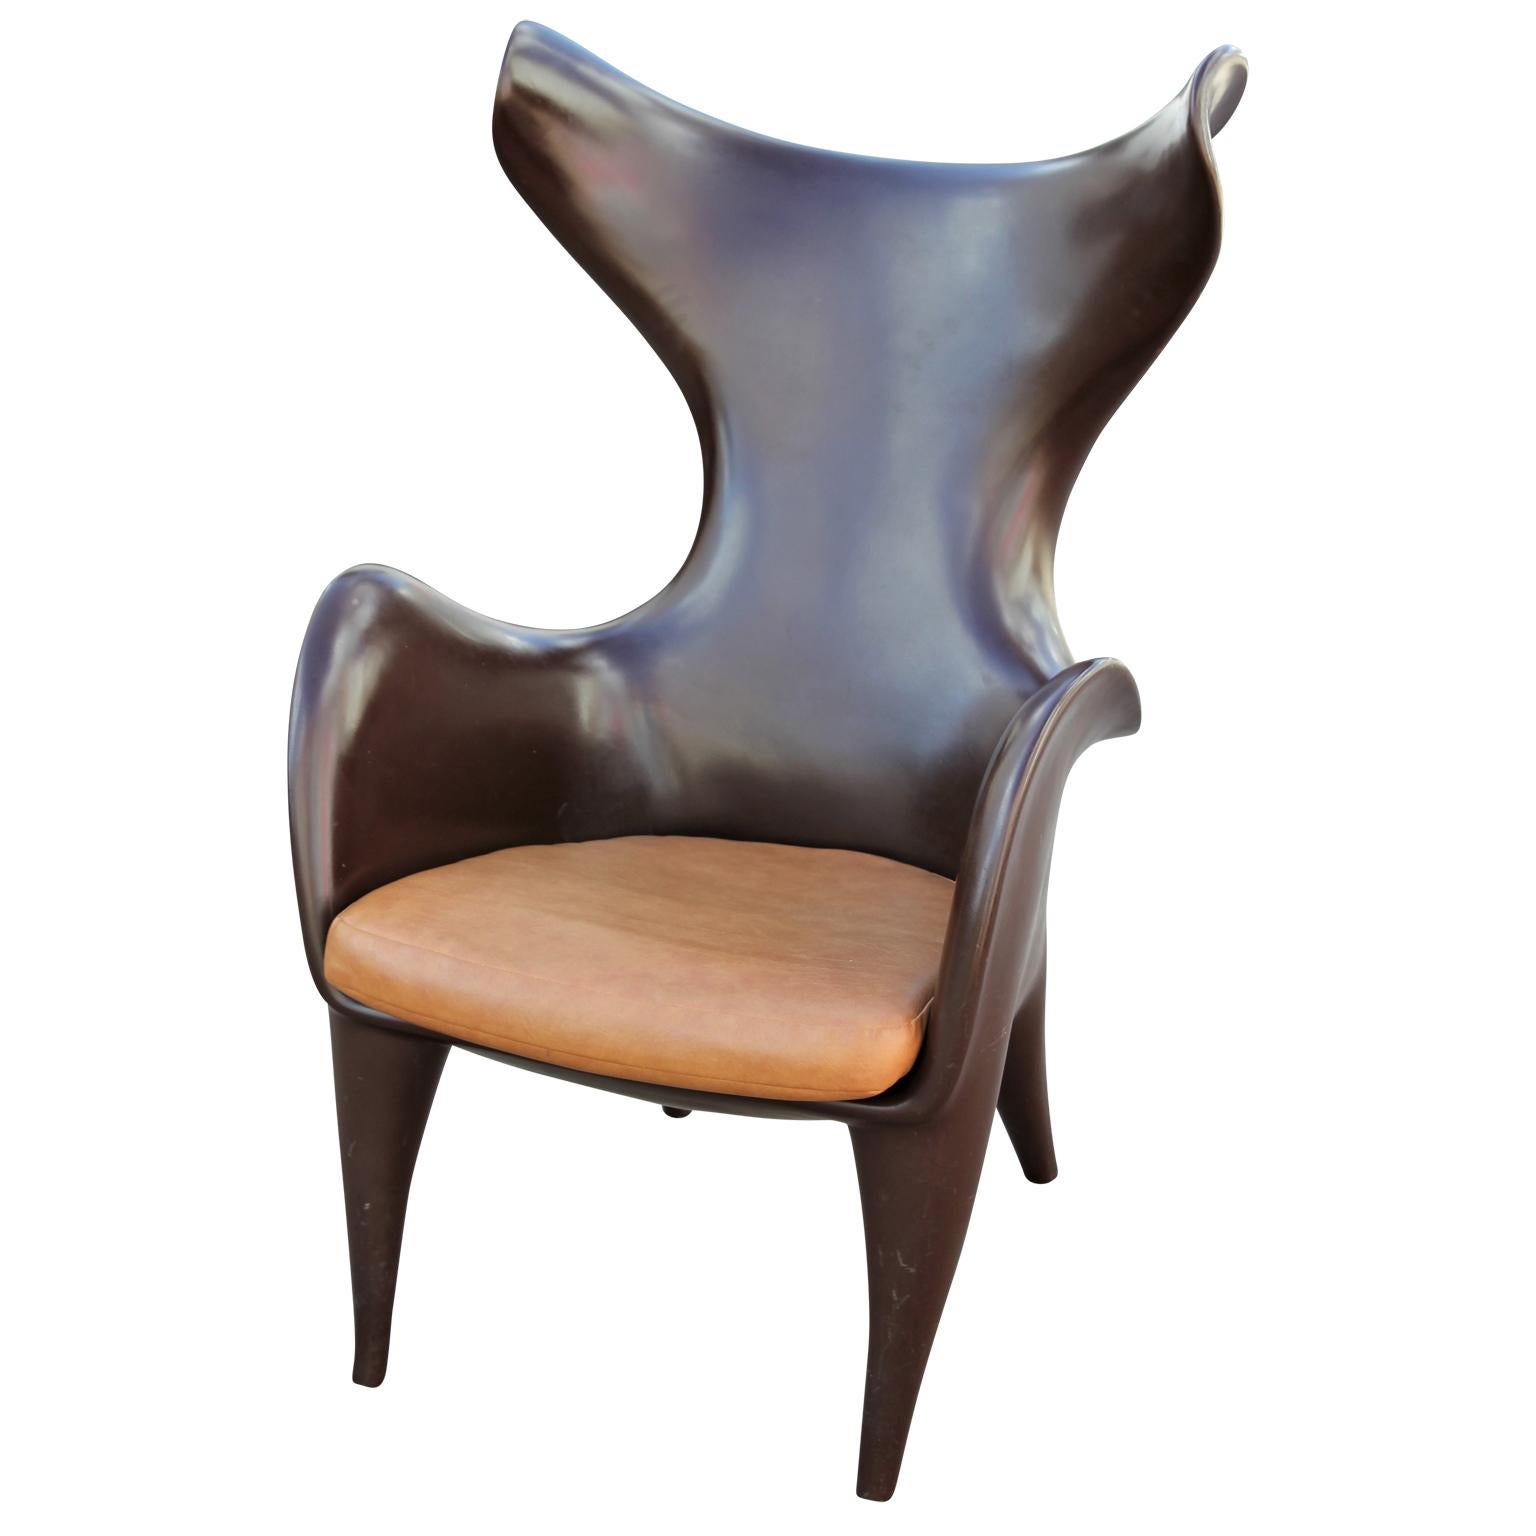 American Pair of Sculptural Modern Frankie Chairs by Jordan Mozer